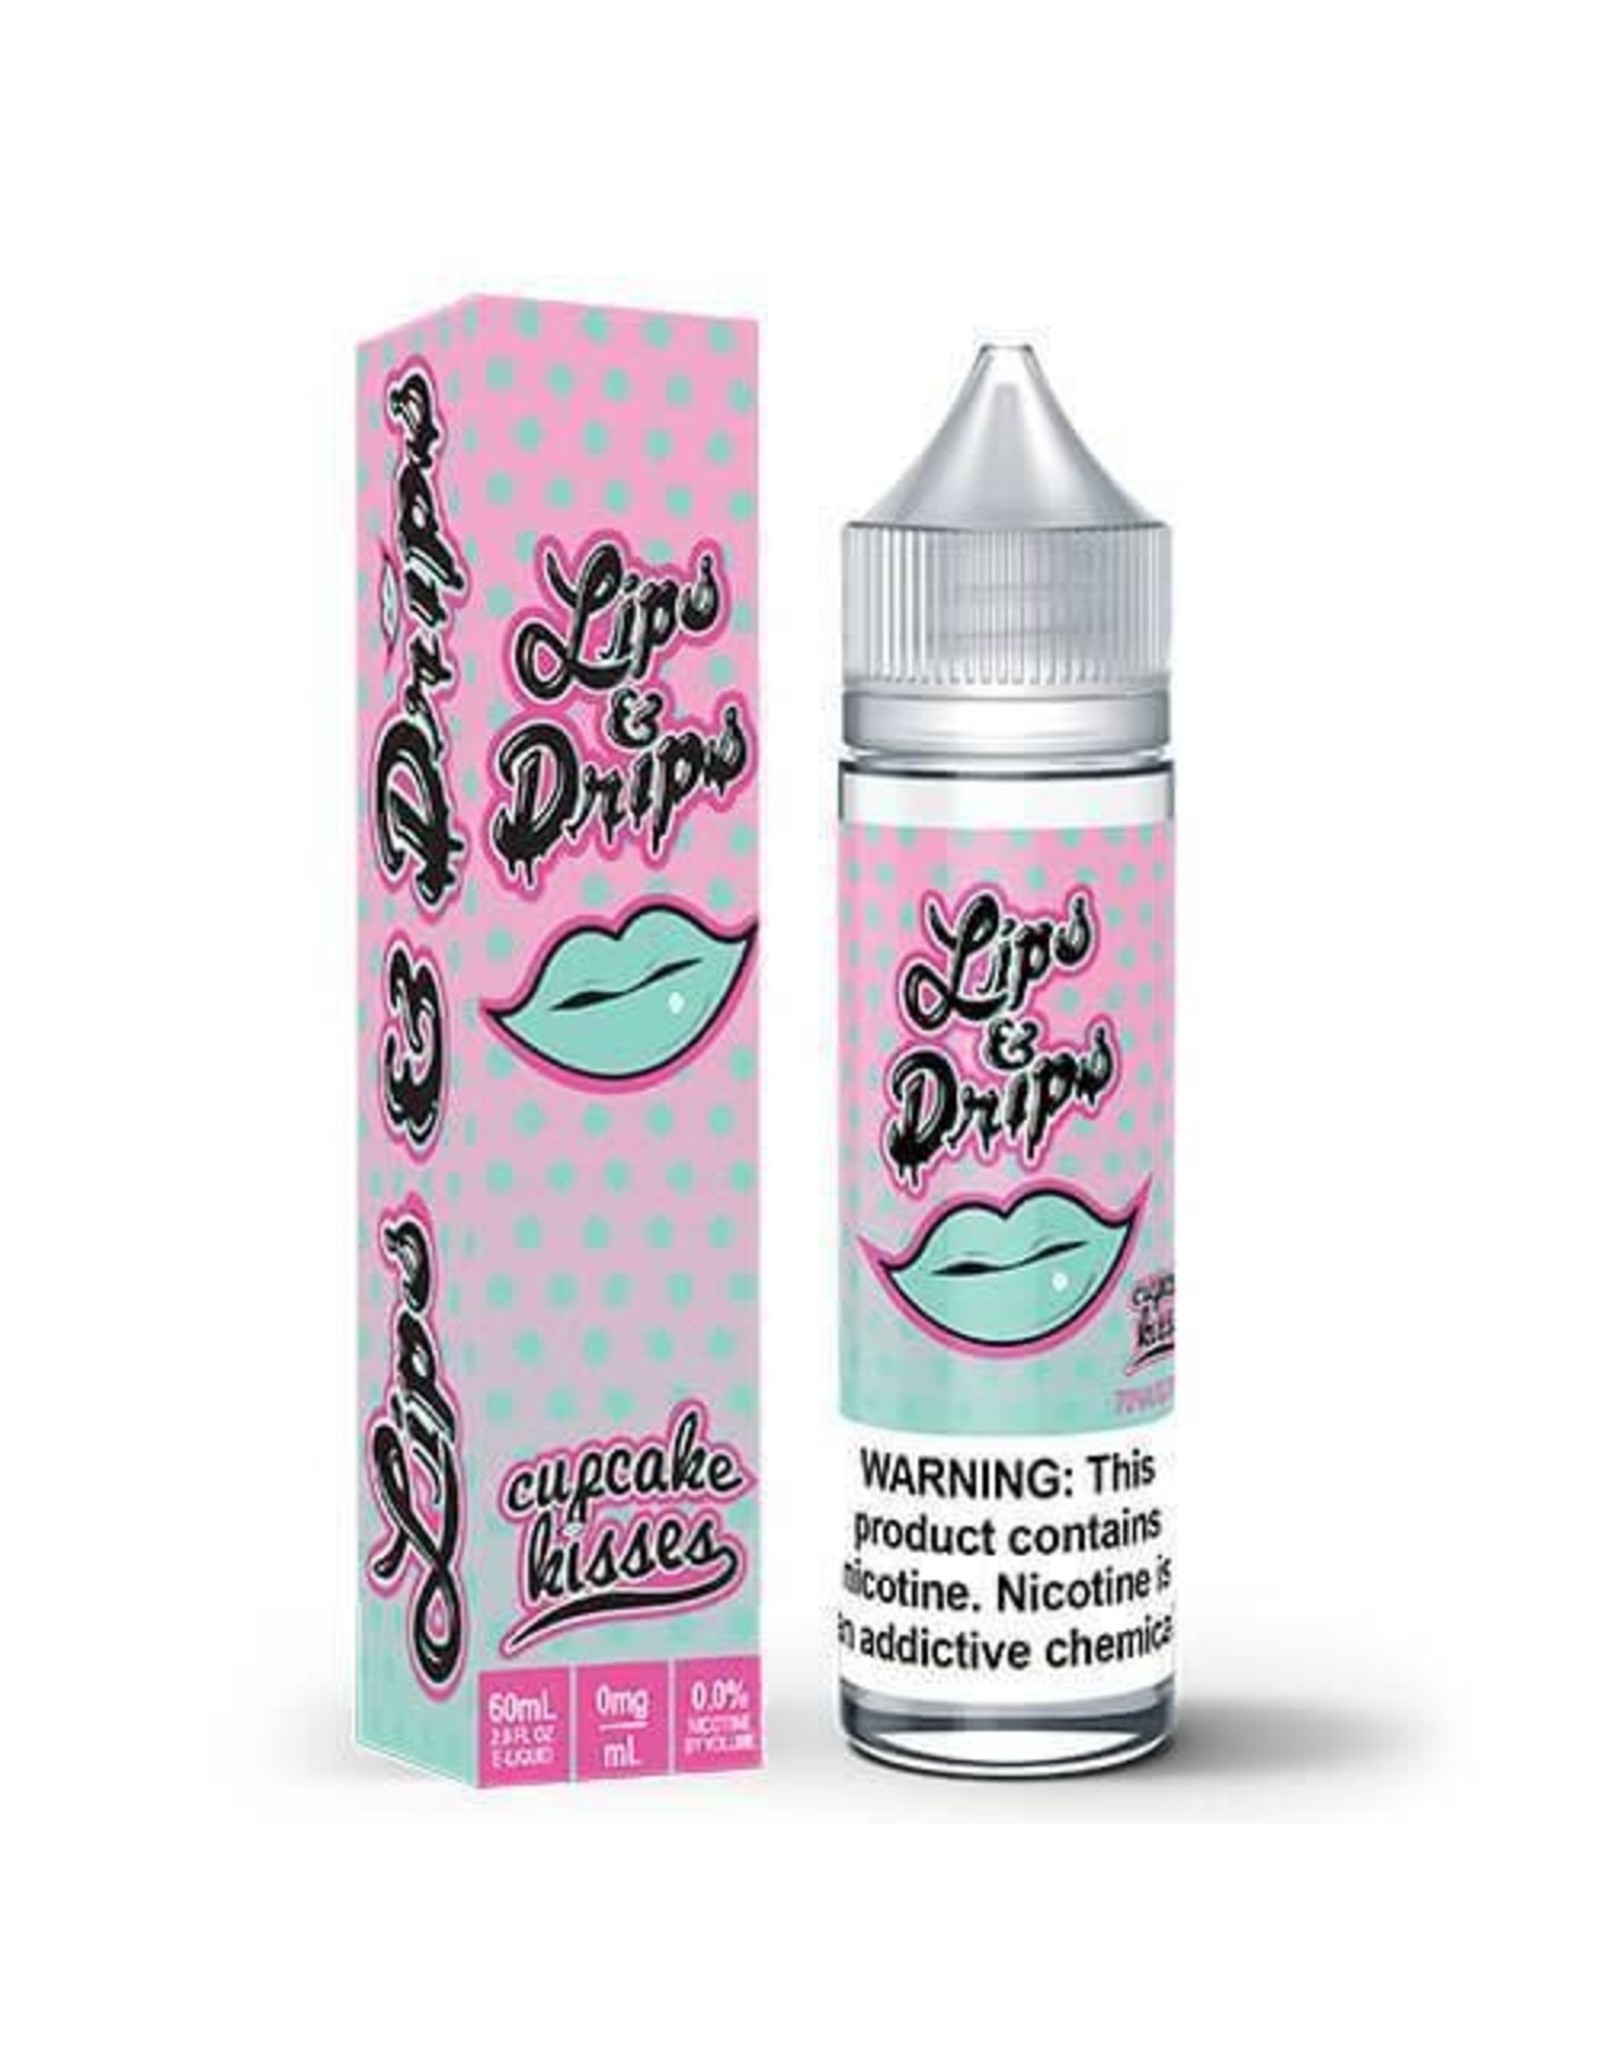 Lips & Drips Lips & Drips  Cupcake Kisses 60 ML 6 MG